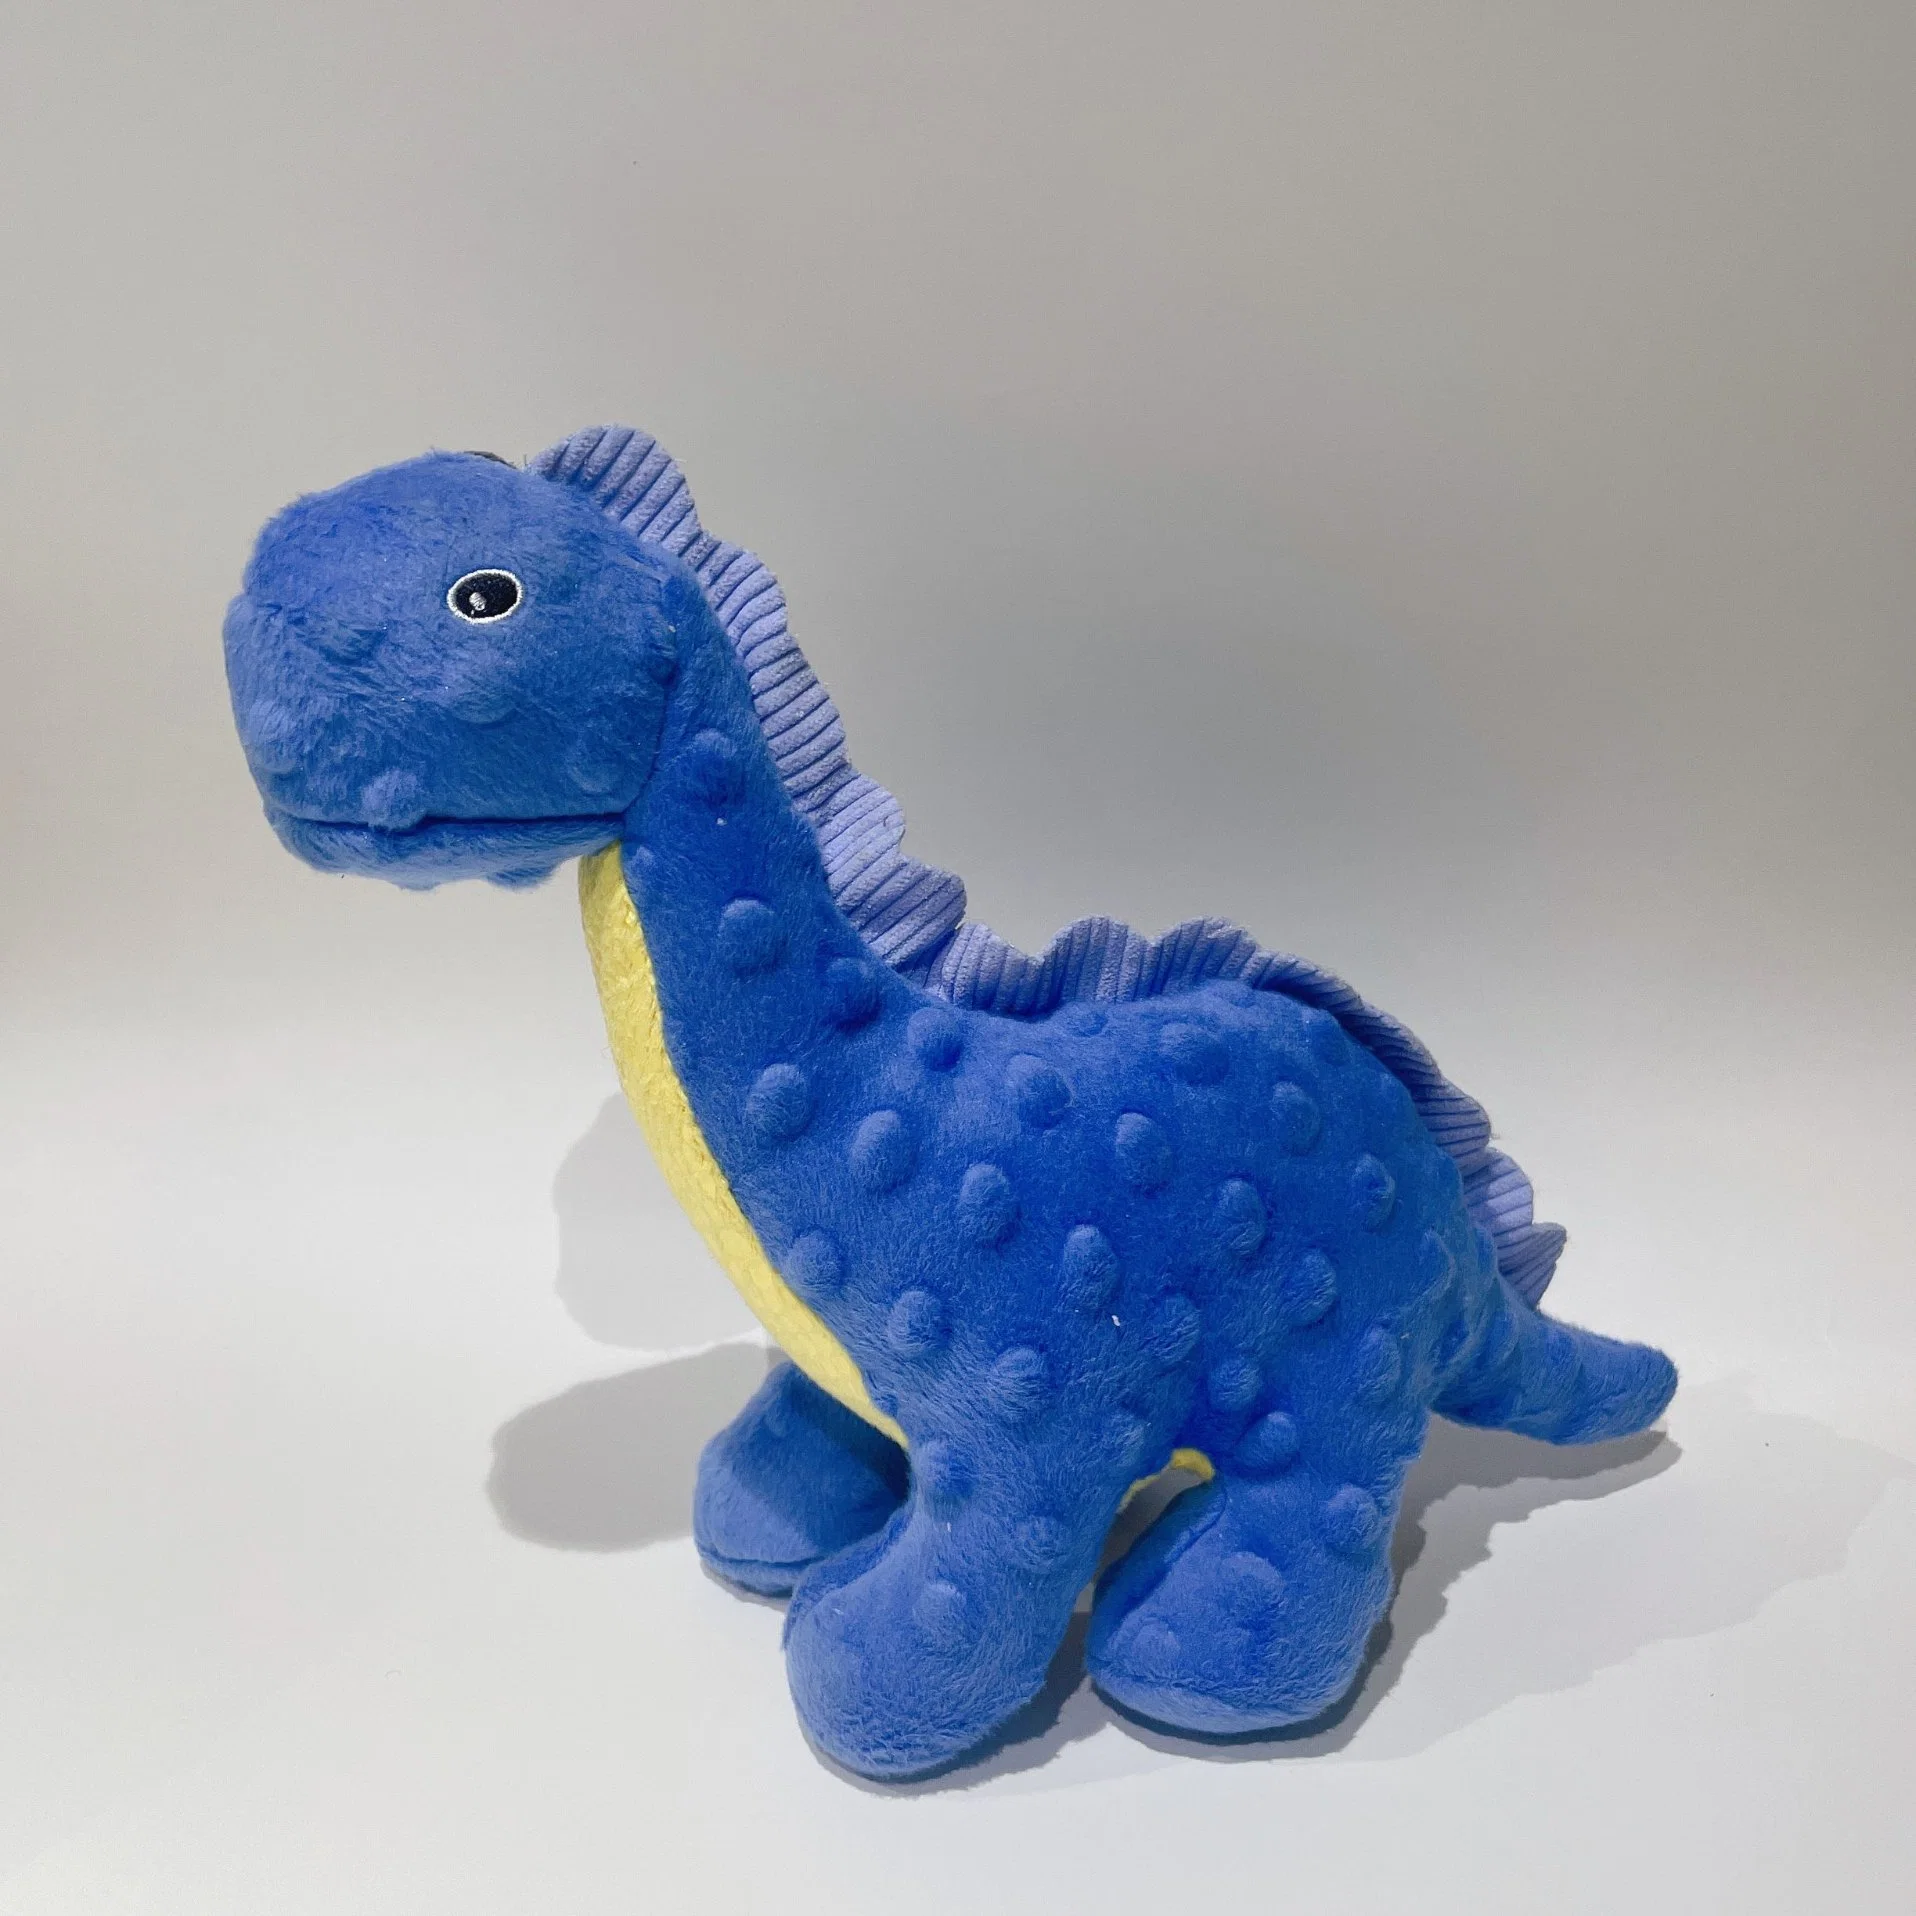 Chameleon Pet Plush Toys Water Bottle Crinkle Wholesale Fashion Stuffed Toys